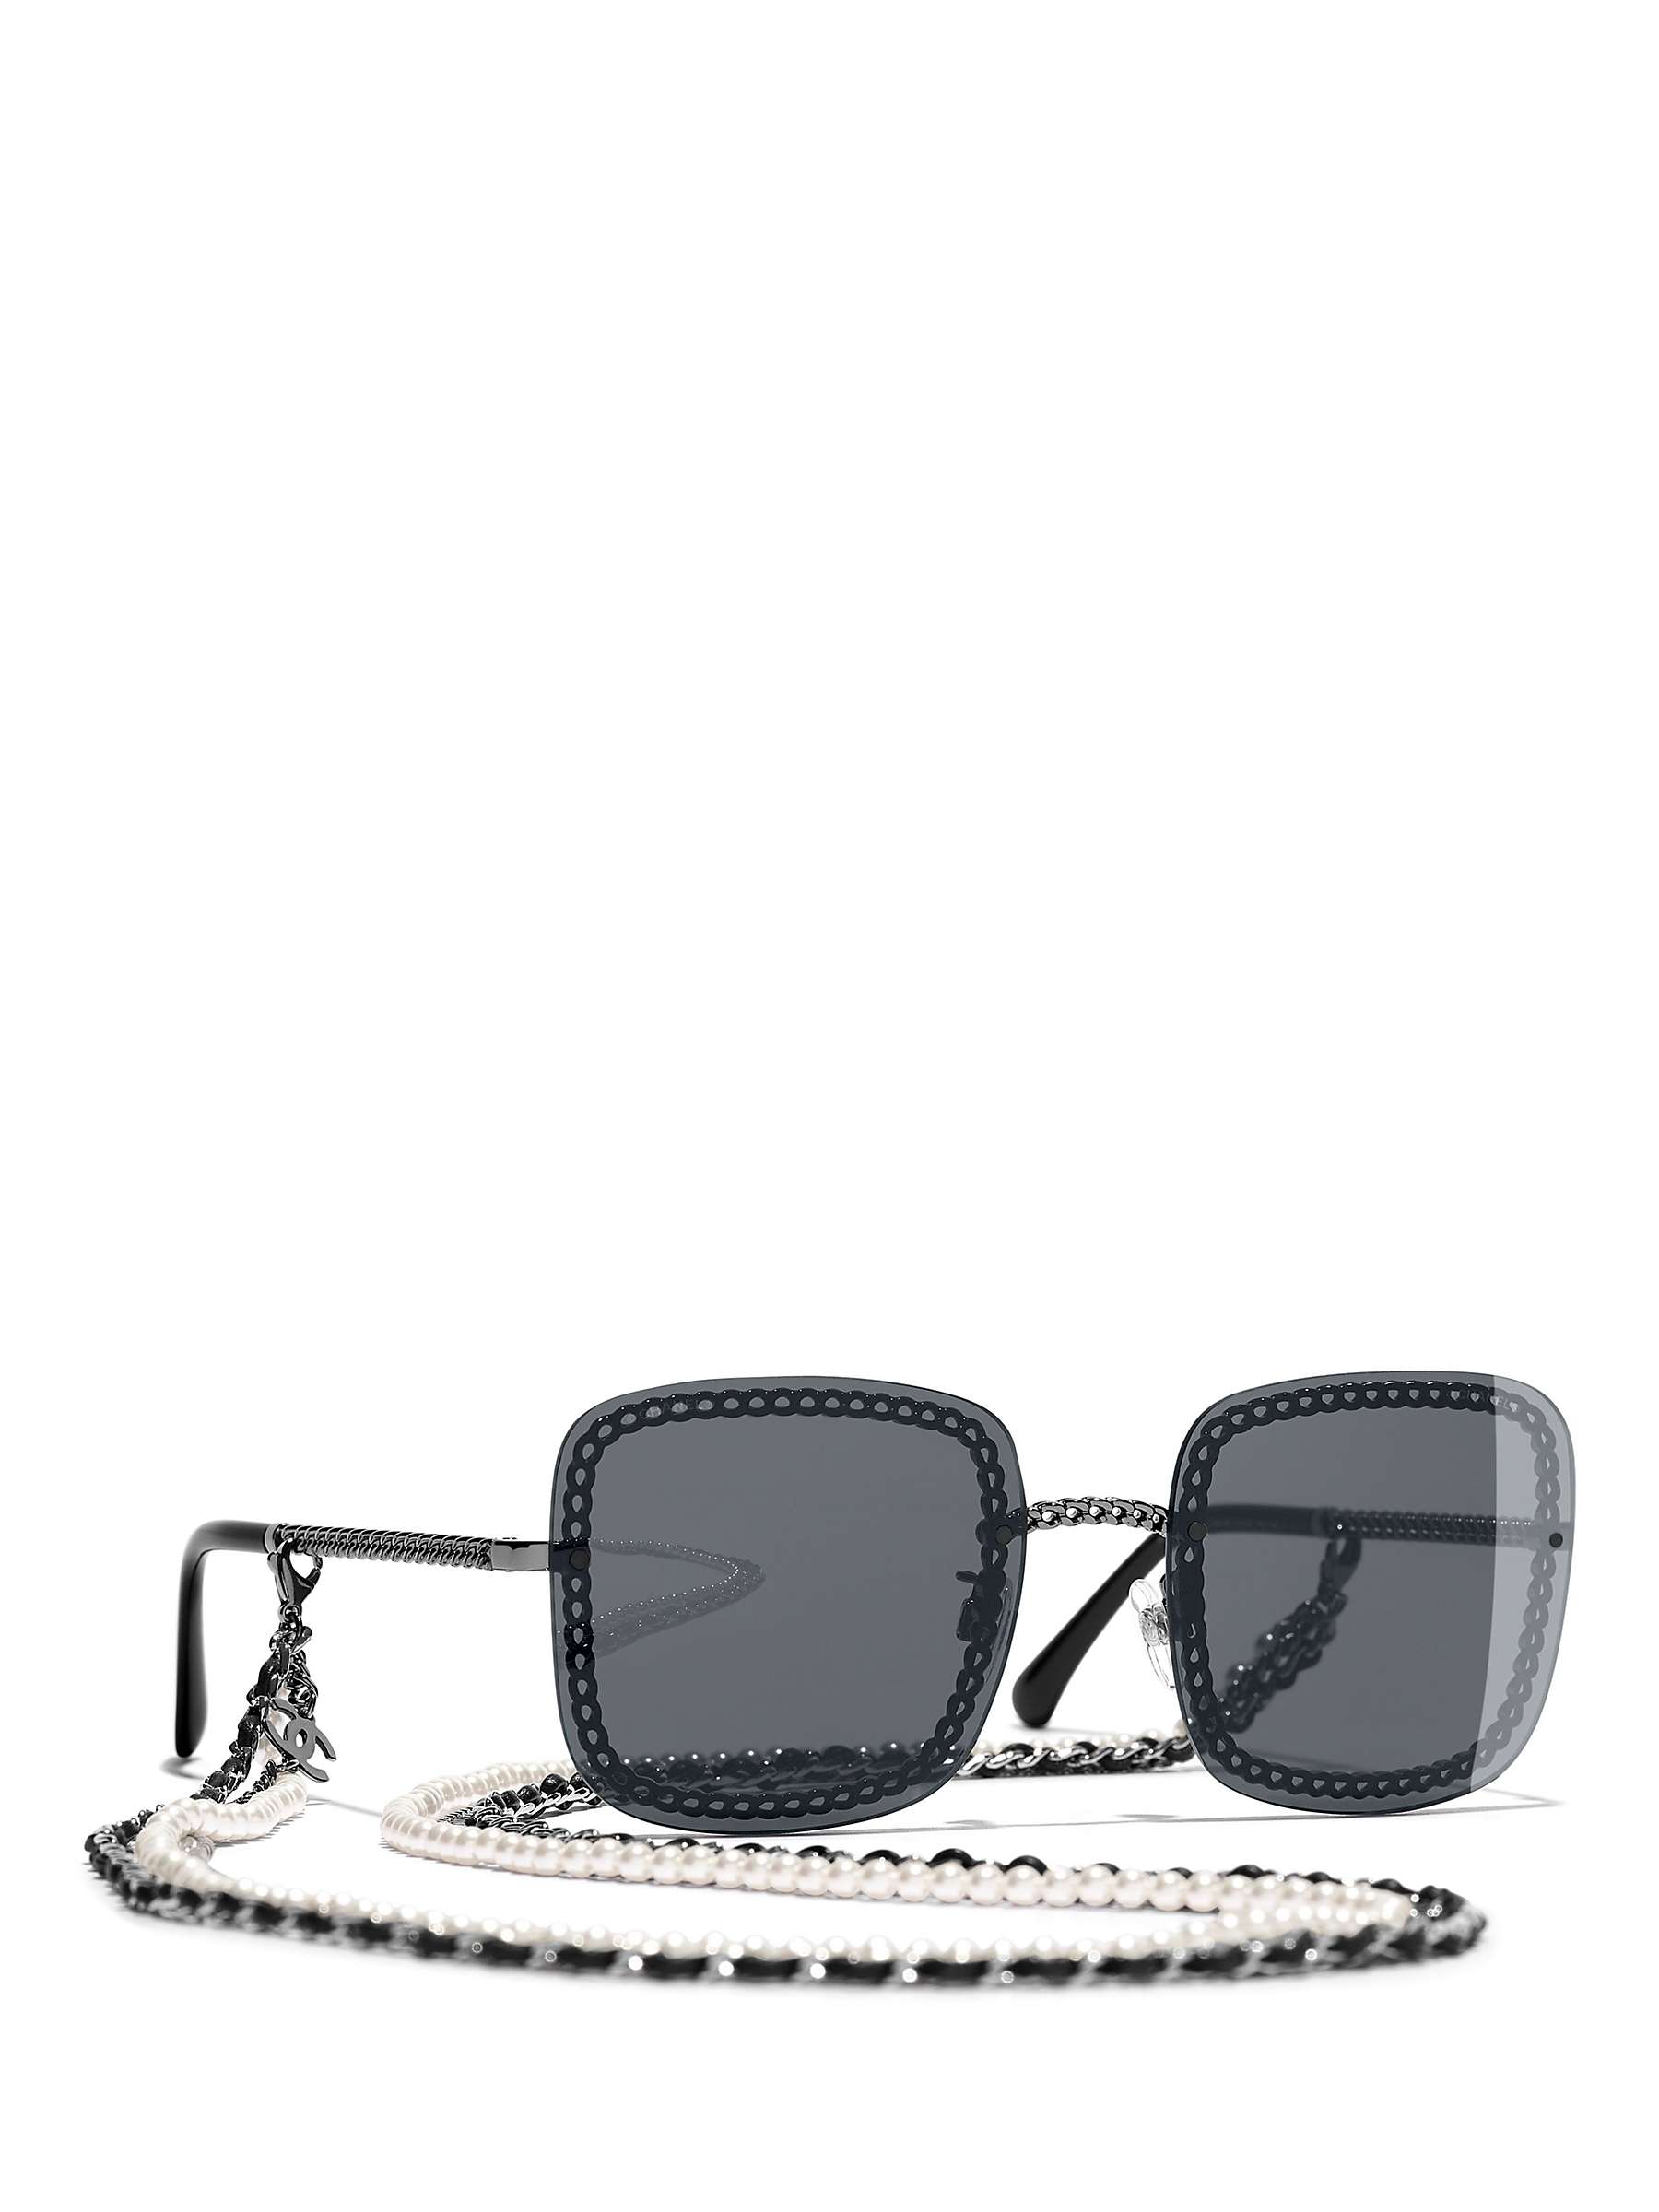 Buy CHANEL Square Sunglasses CH4244 Gunmetal/Grey Online at johnlewis.com